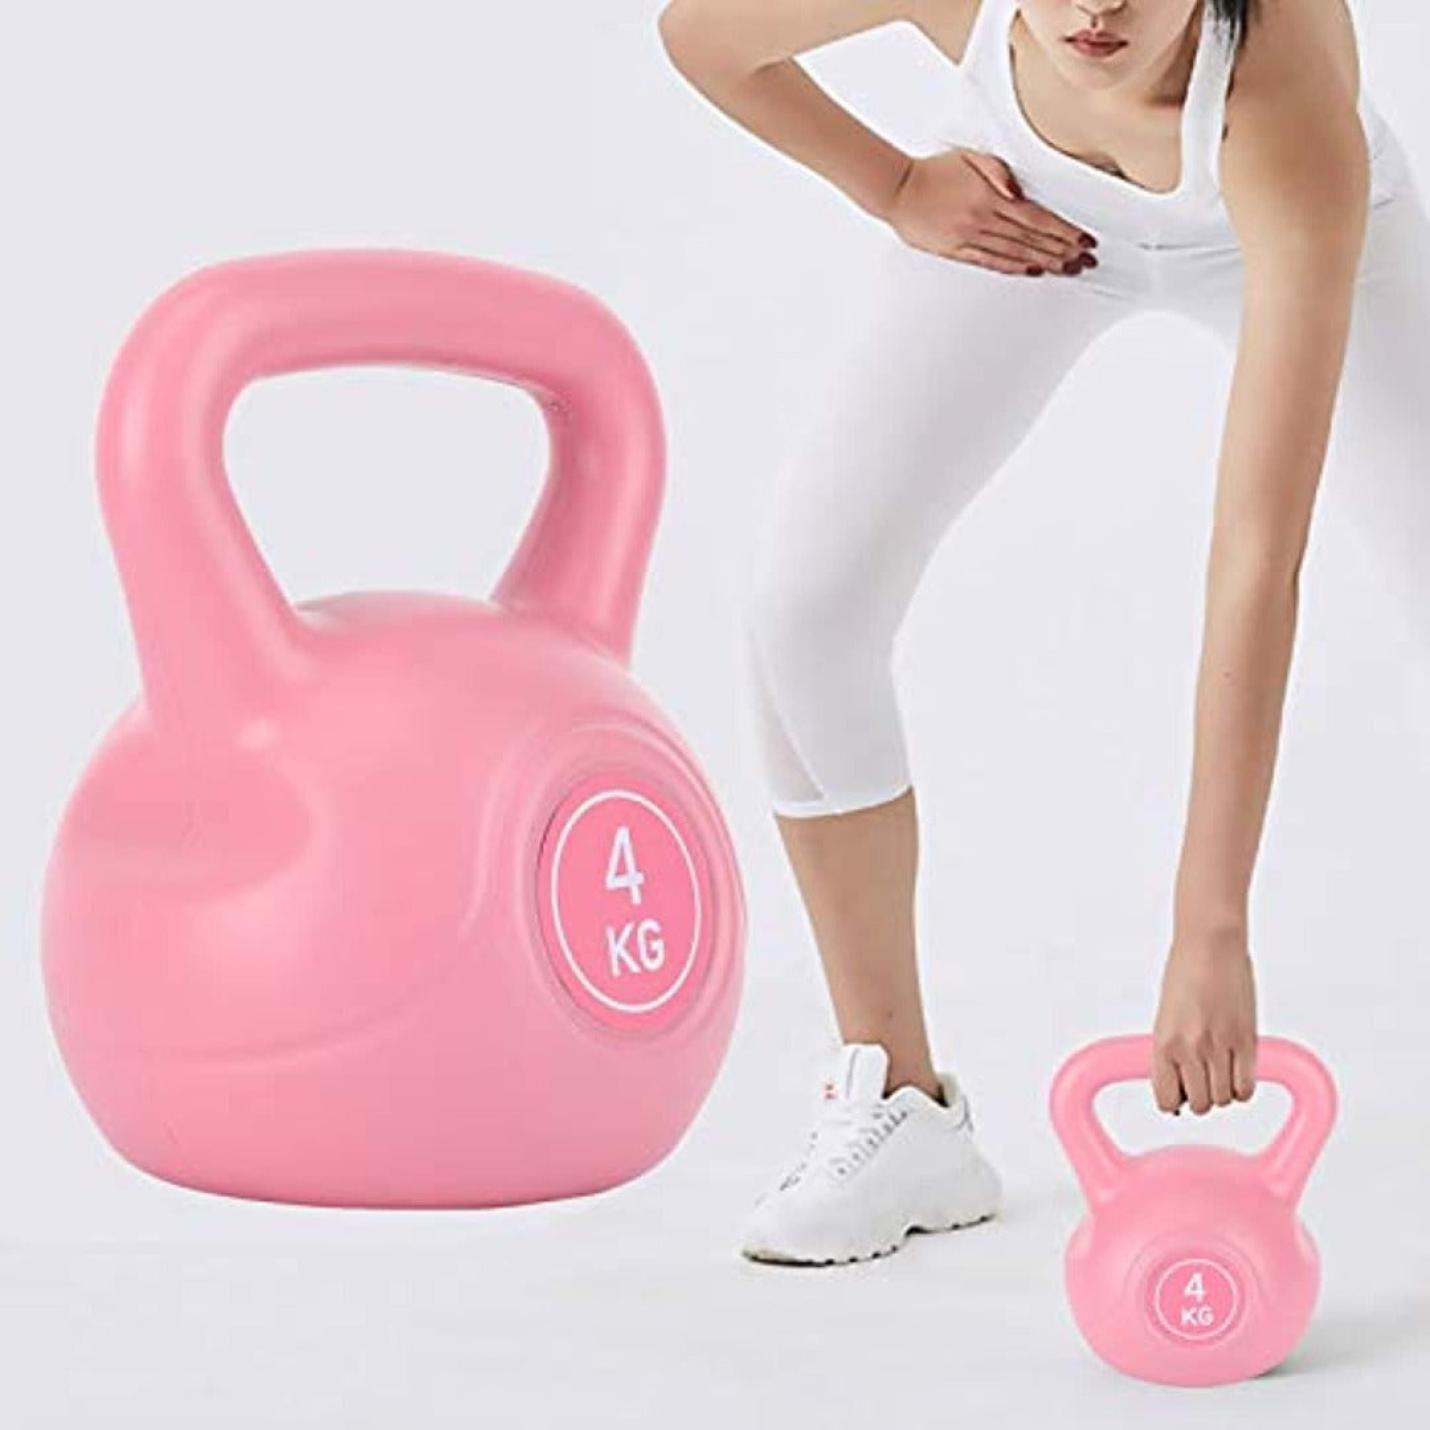 Fitness kettlebell met brede grip voor arm training